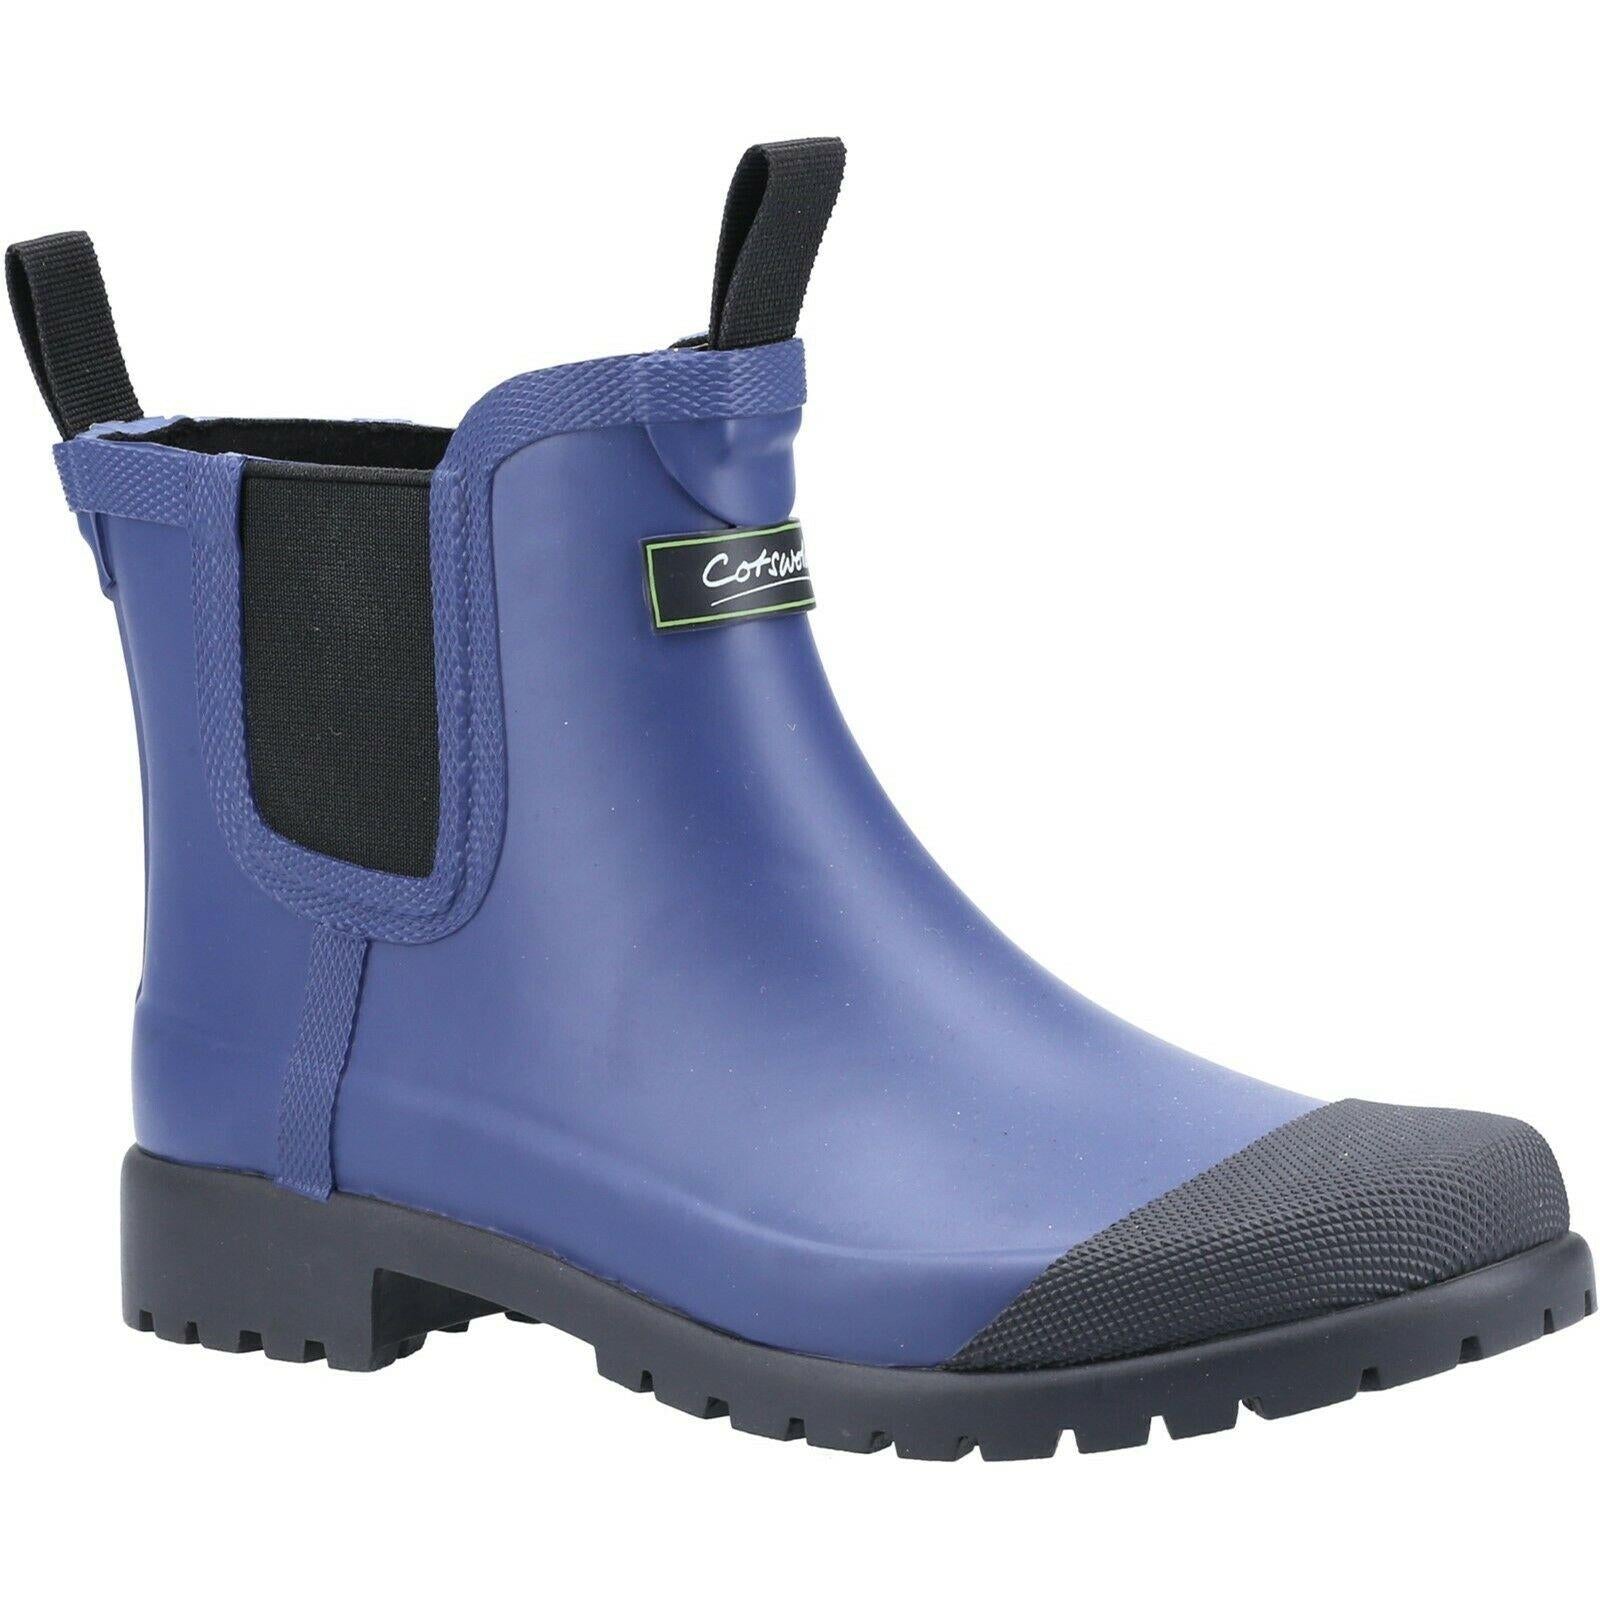 Cotswold Blenheim navy blue ladies waterproof slip on ankle mid wellington boots